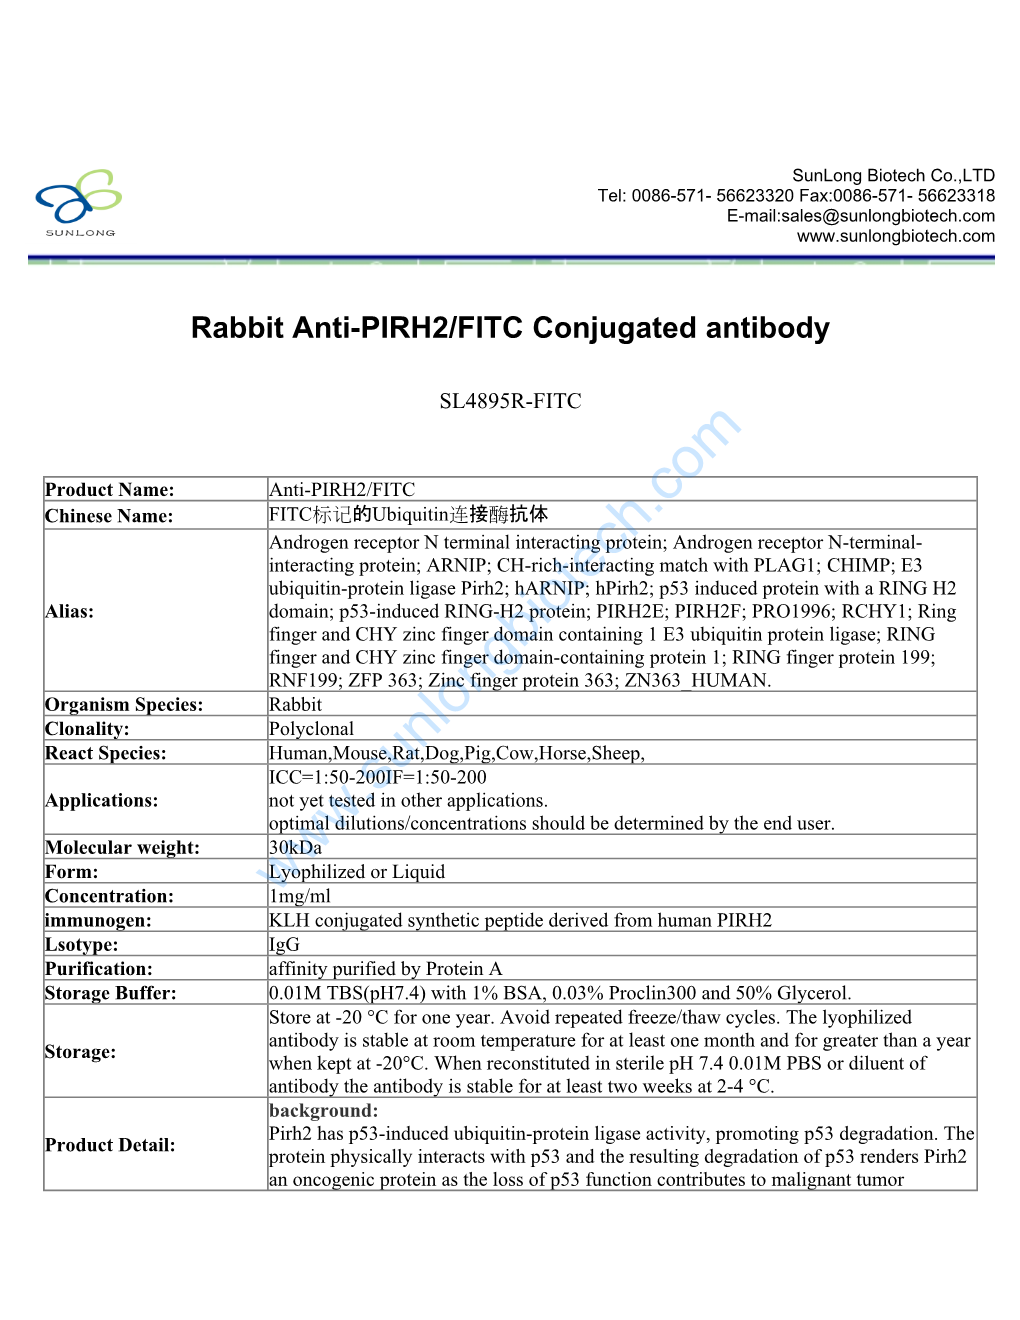 Rabbit Anti-PIRH2/FITC Conjugated Antibody